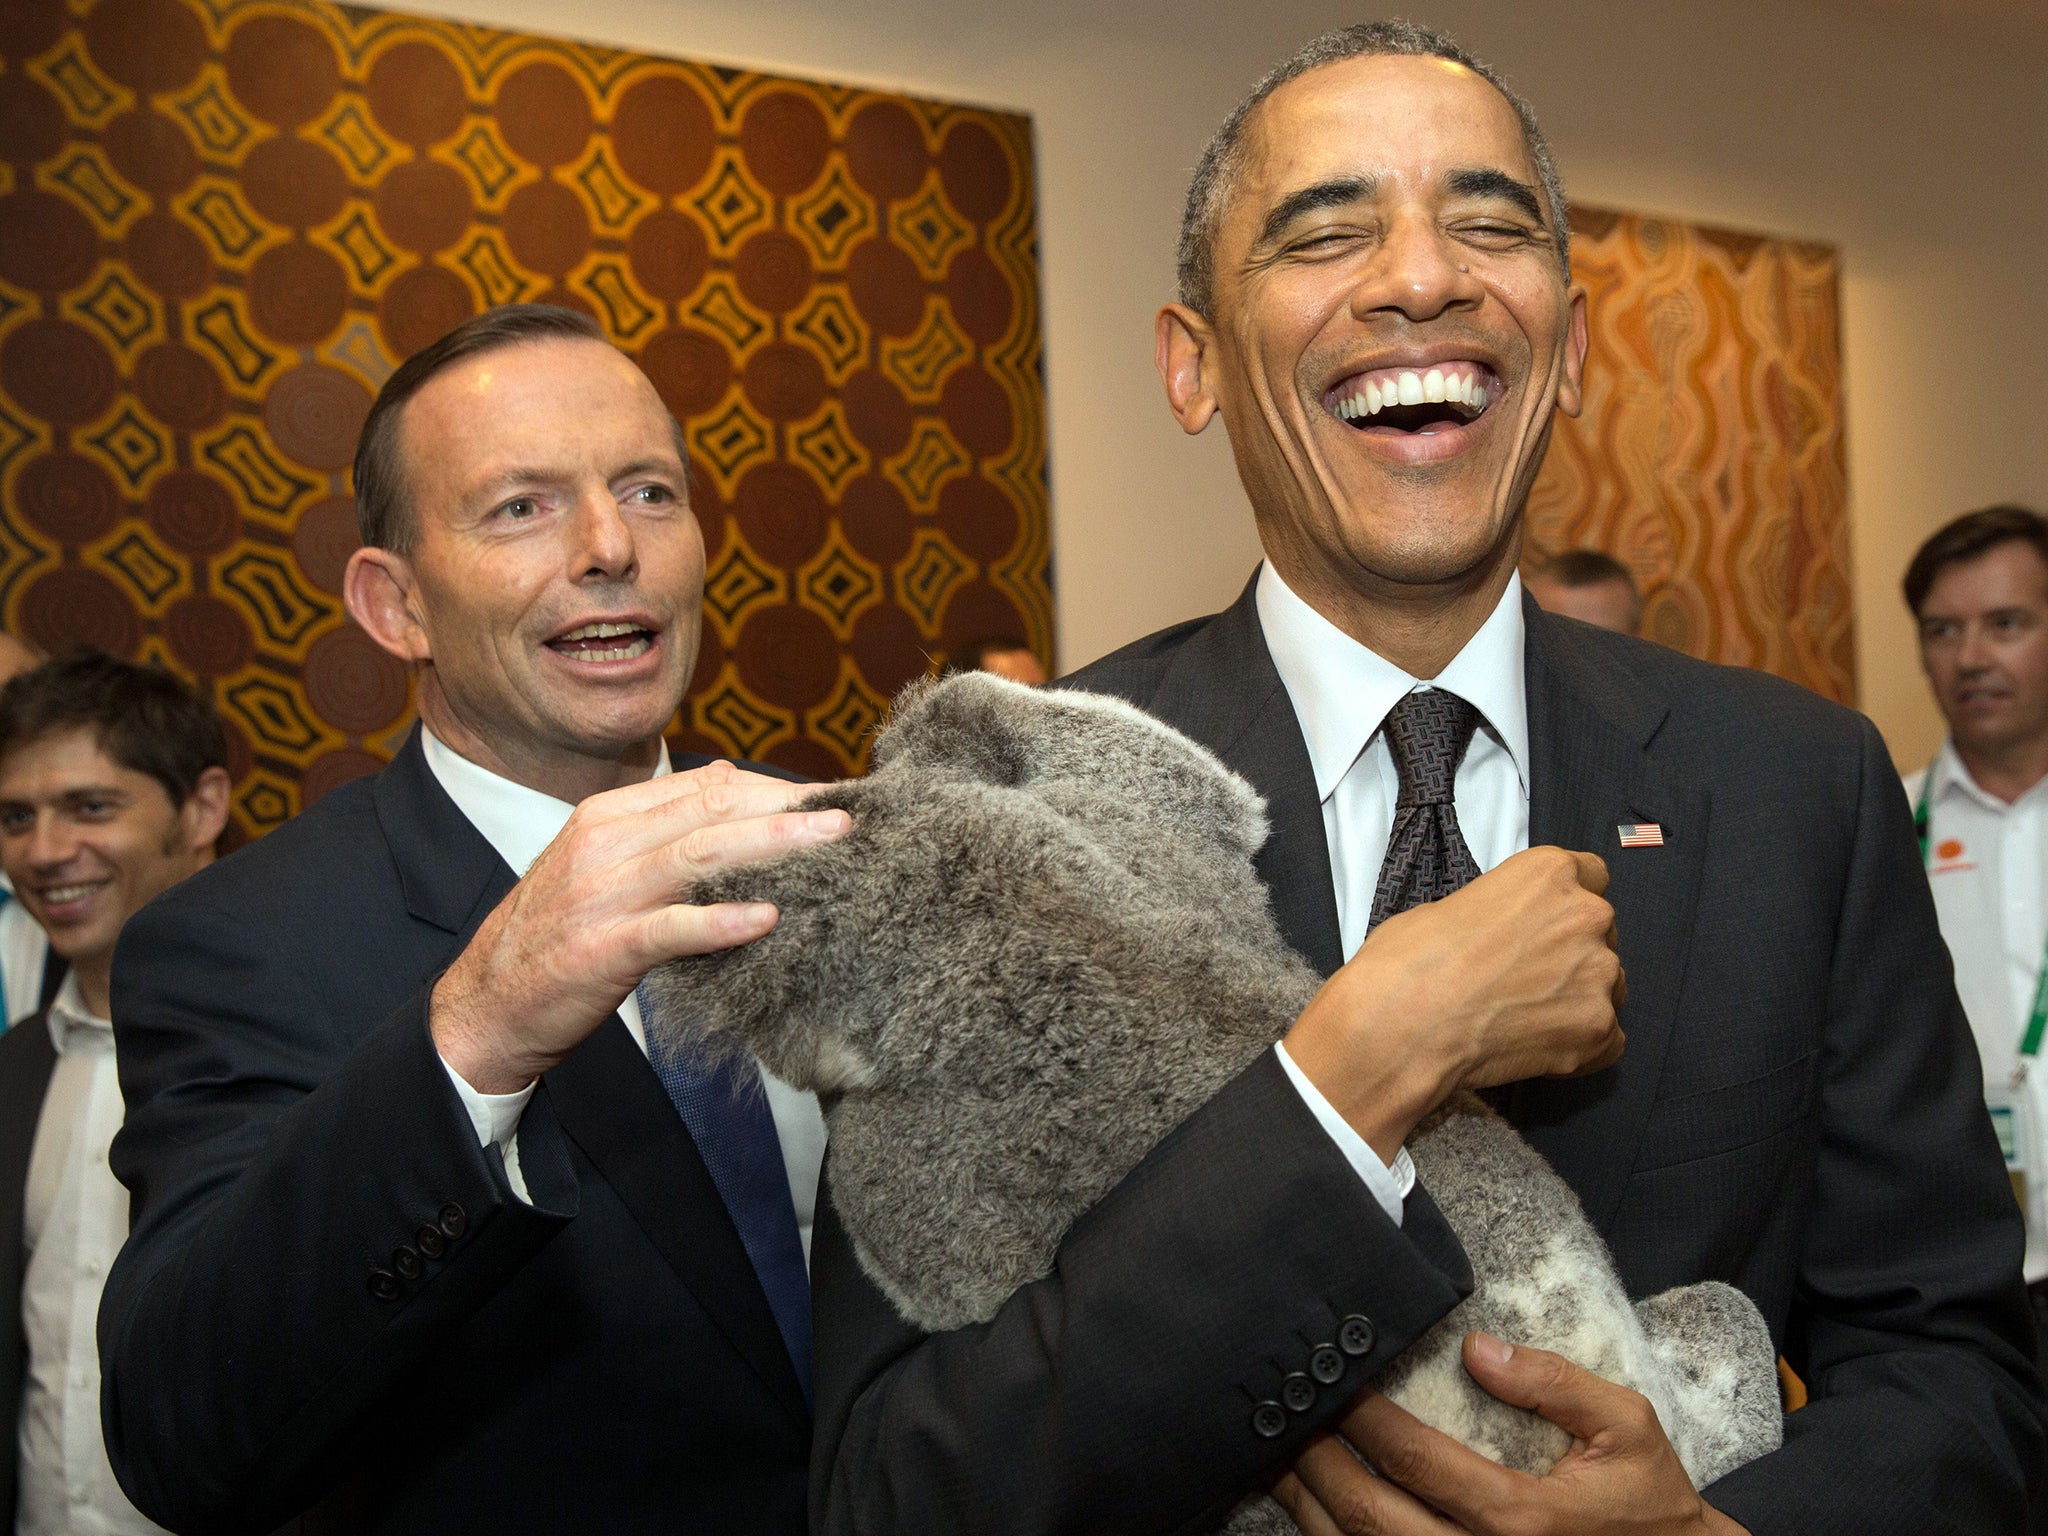 Australia's Prime Minister Tony Abbott and US President Barack Obama clashed at the G20